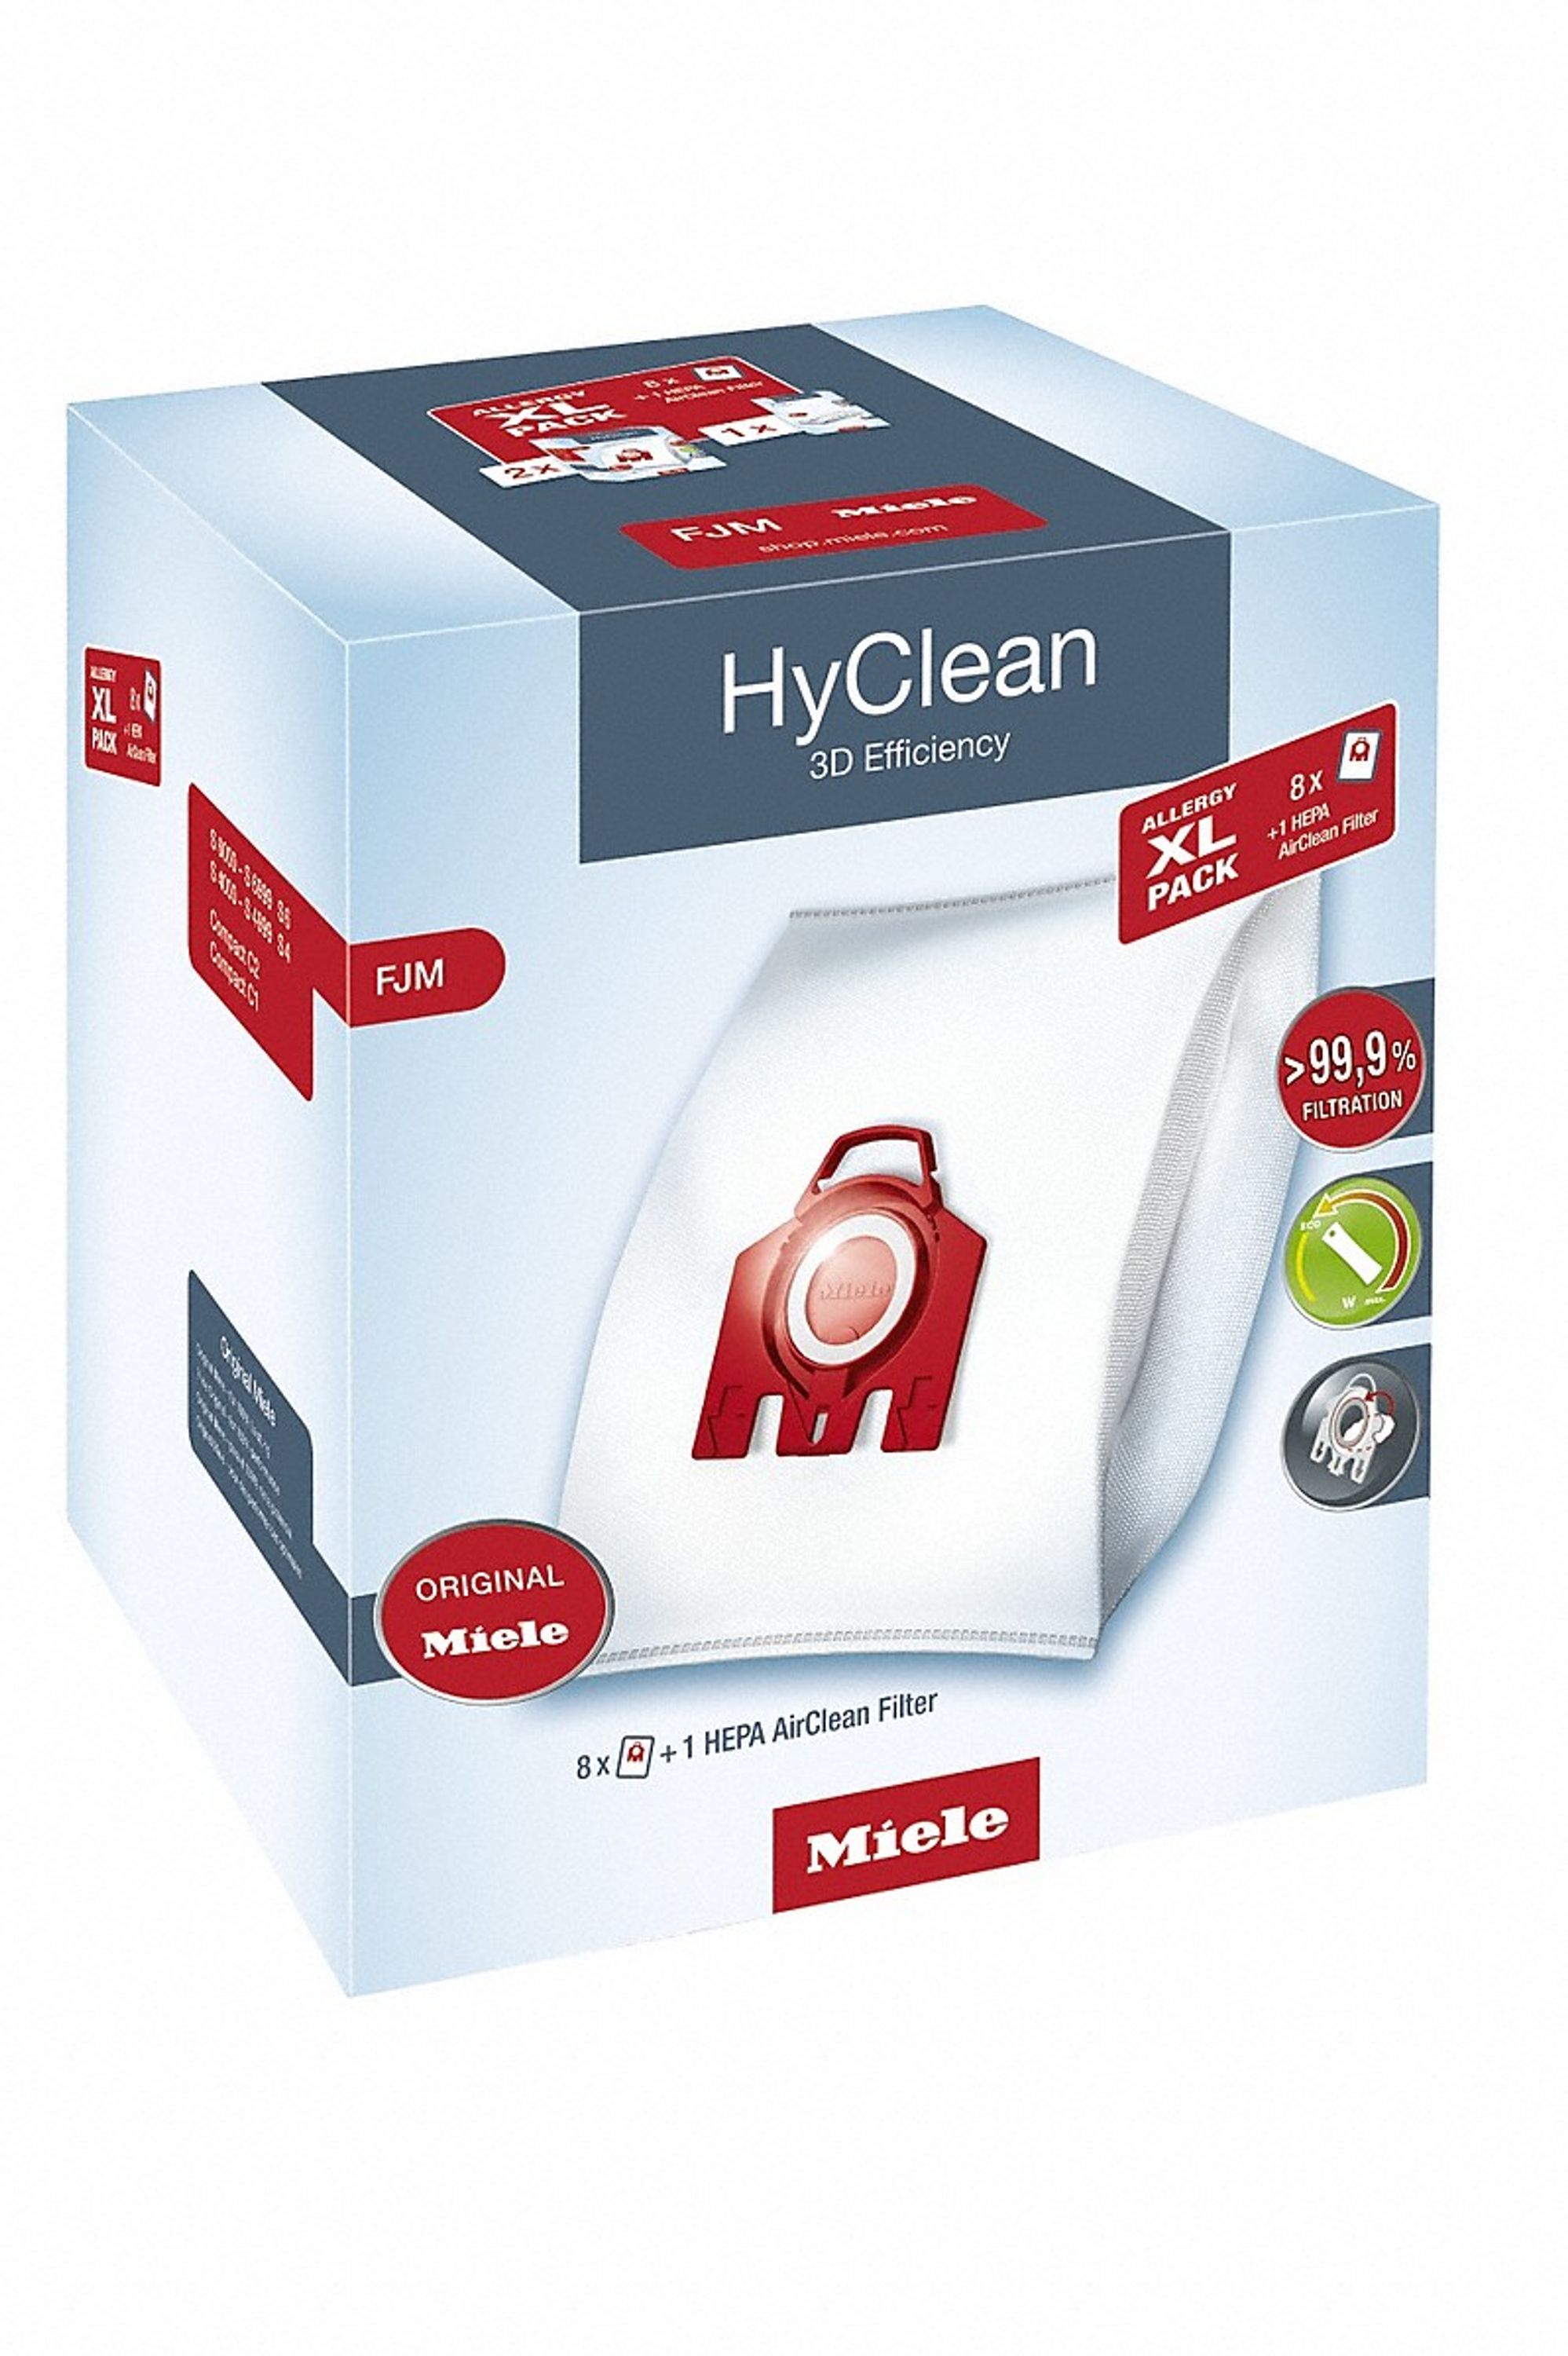 Miele HyClean 3D Efficiency FJM - Allergy XL-Pack